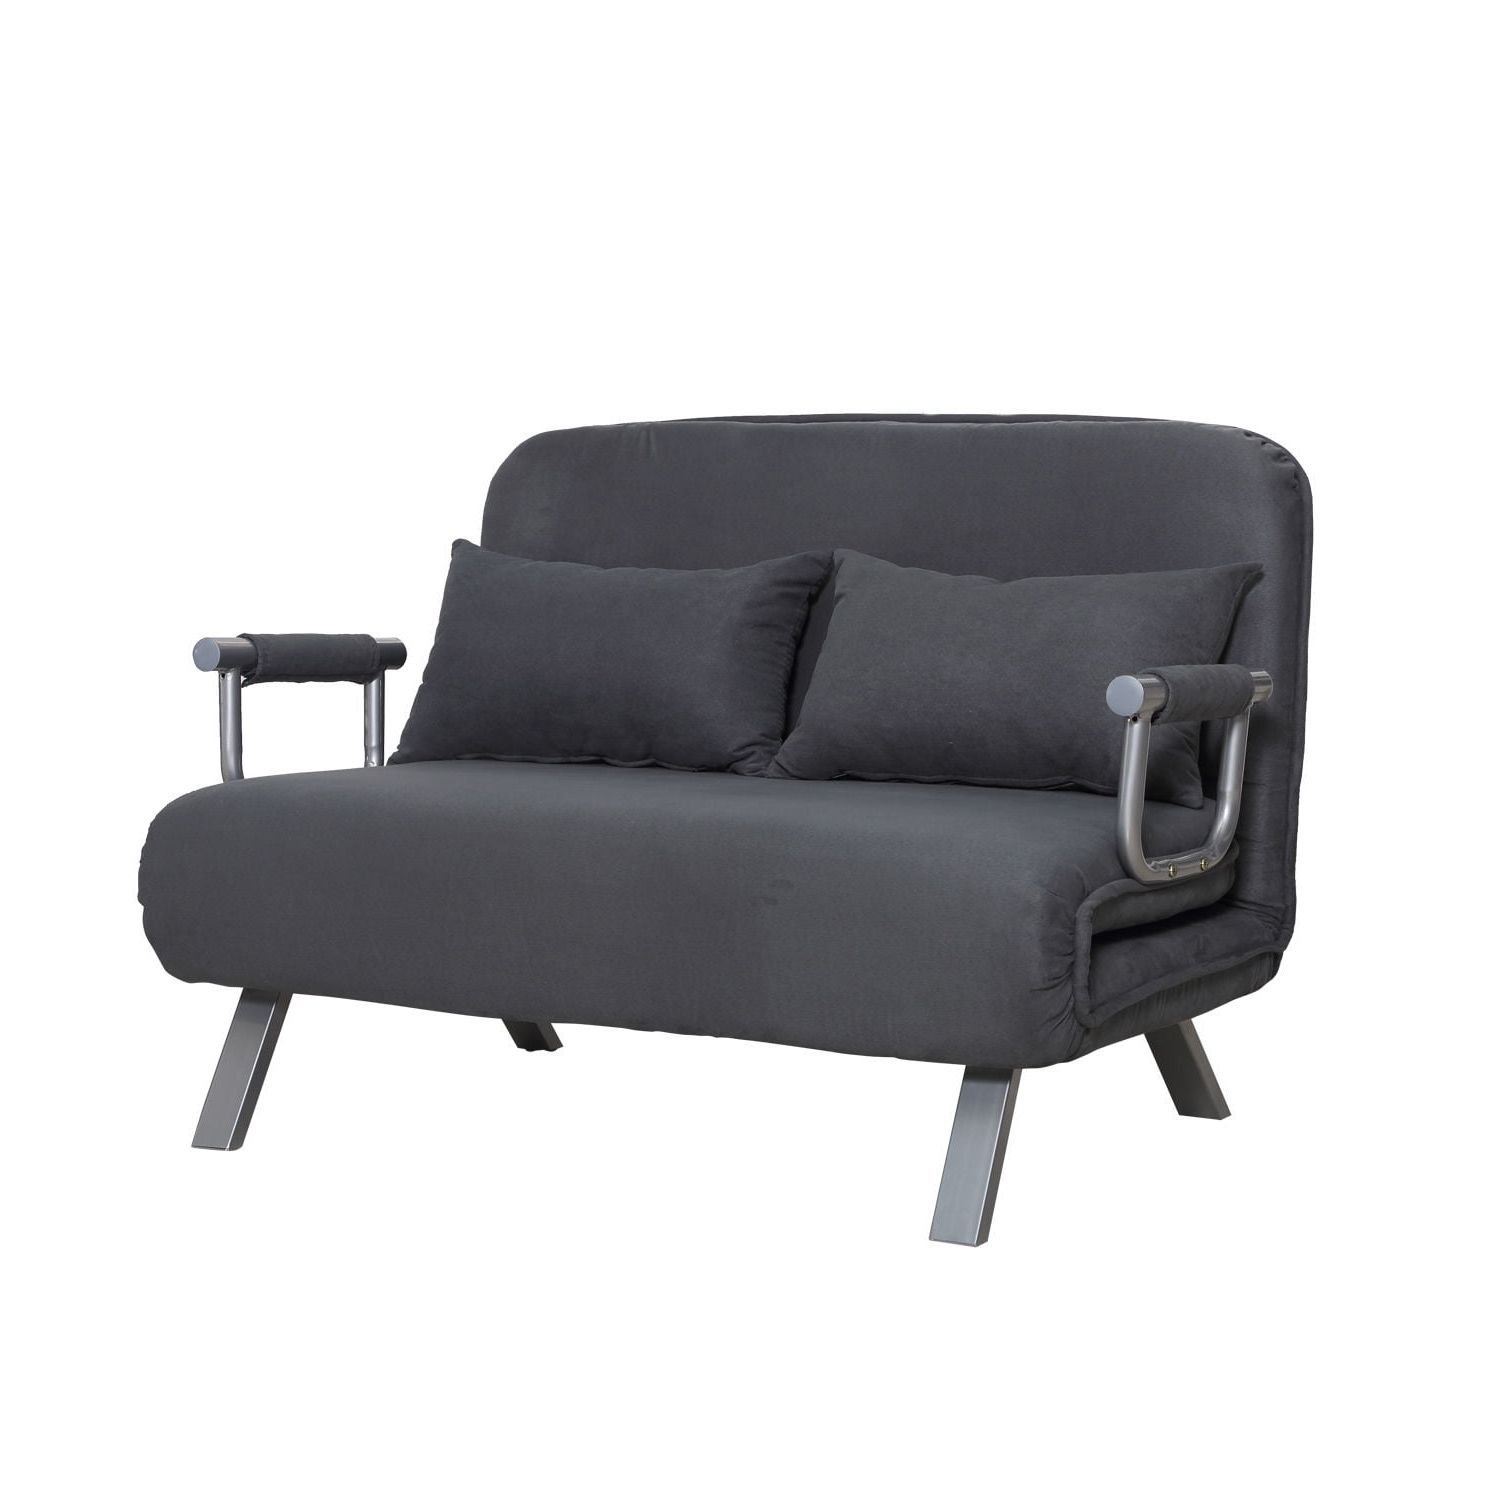 Homcom Twin Size Folding 5 Position Steel Convertible Sleeper Bed Chair Regarding Convertible Light Gray Chair Beds (View 8 of 20)